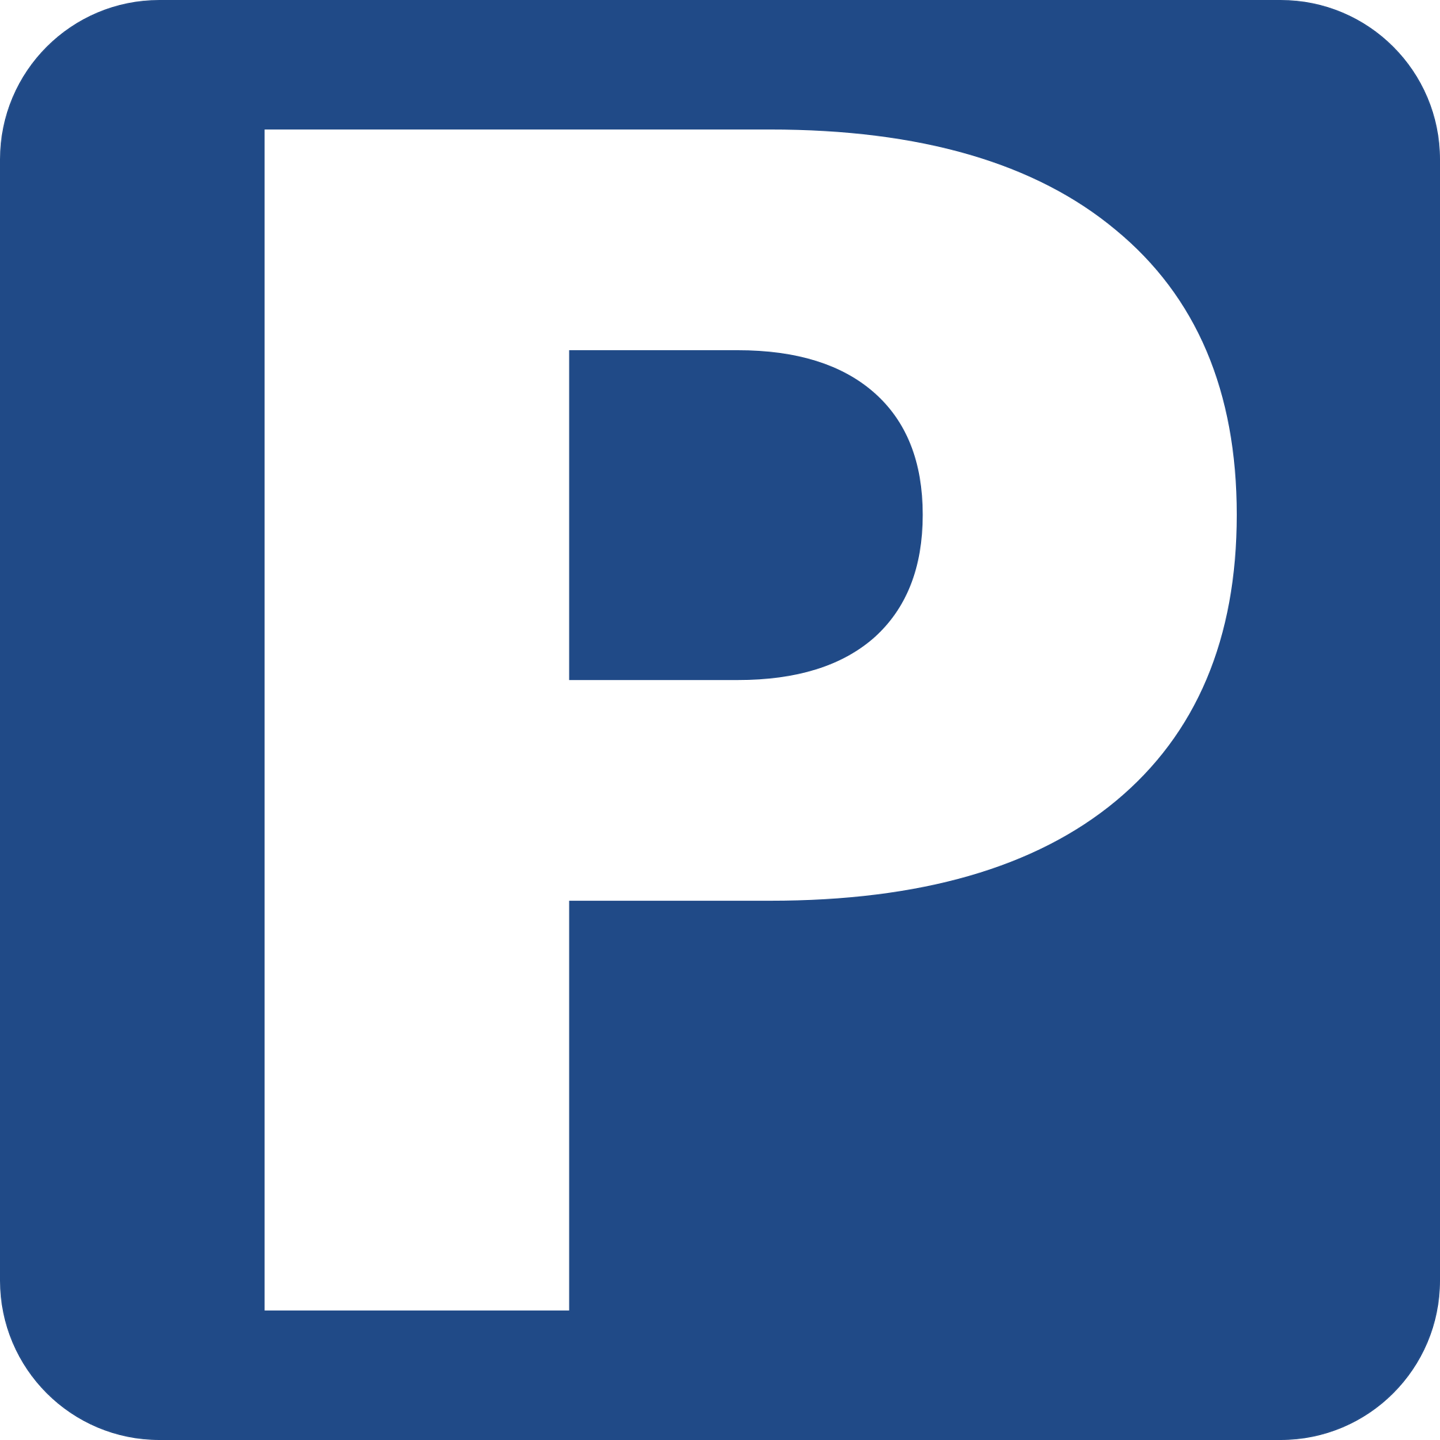 Parking & garage te  huur in Deurne 2100 100.00€  slaapkamers m² - Zoekertje 161374